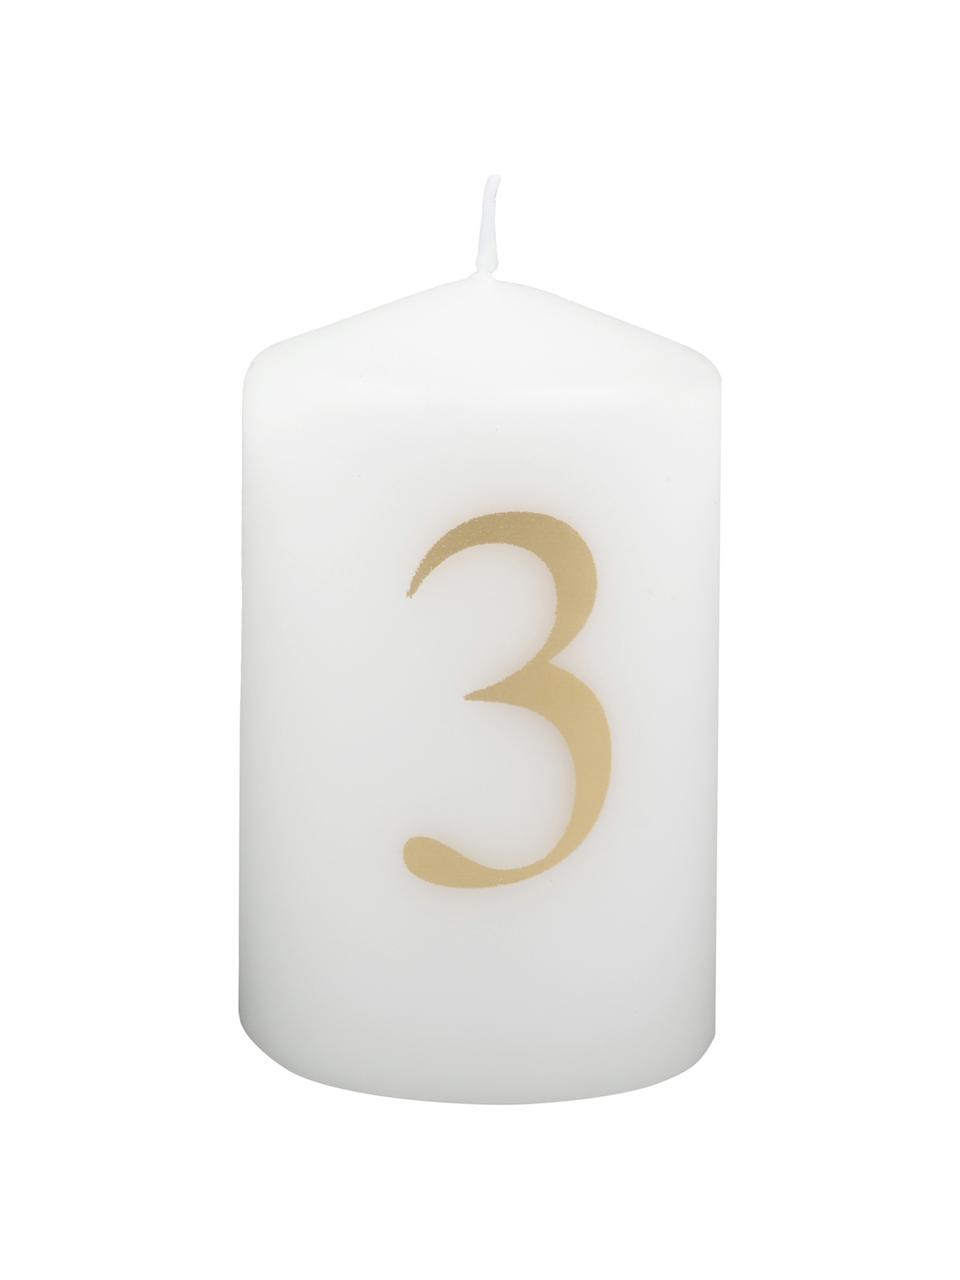 Adventskaarsen Aven H 9 cm, 4 stuks, Paraffinewas, Wit, goudkleurig, Ø 6 cm